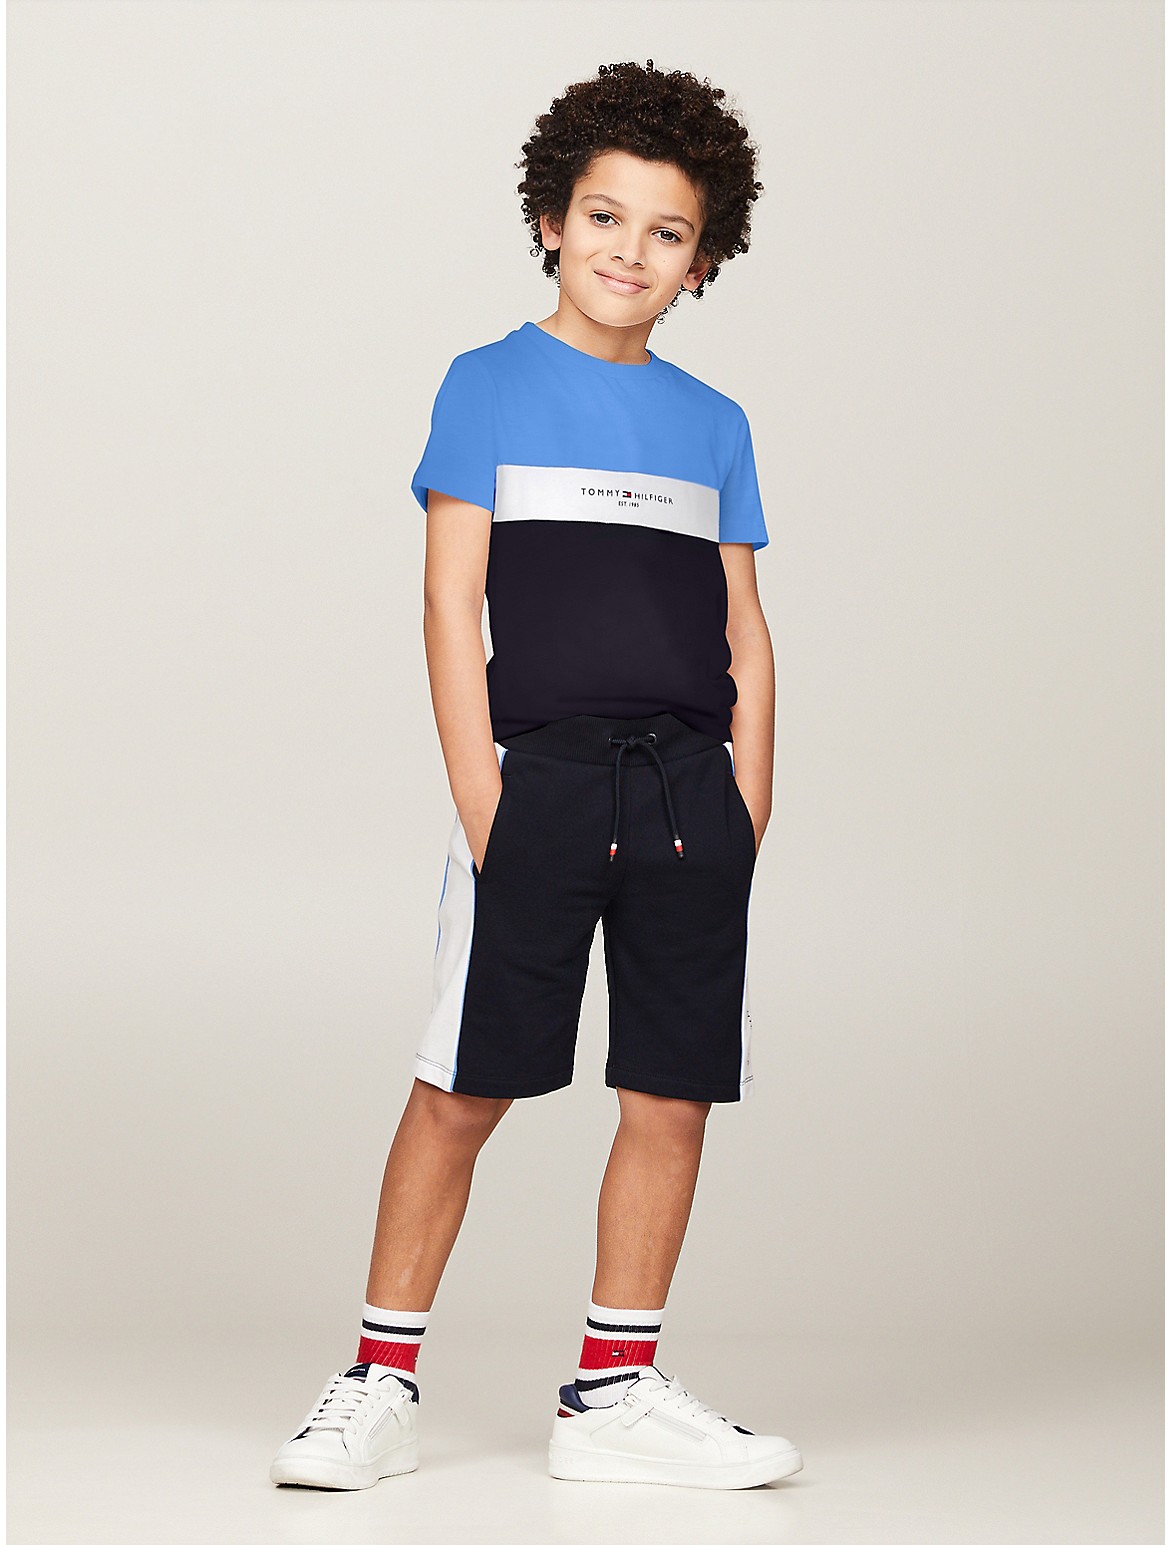 Tommy Hilfiger Boys' Kids' Colorblock T-Shirt and Short Set